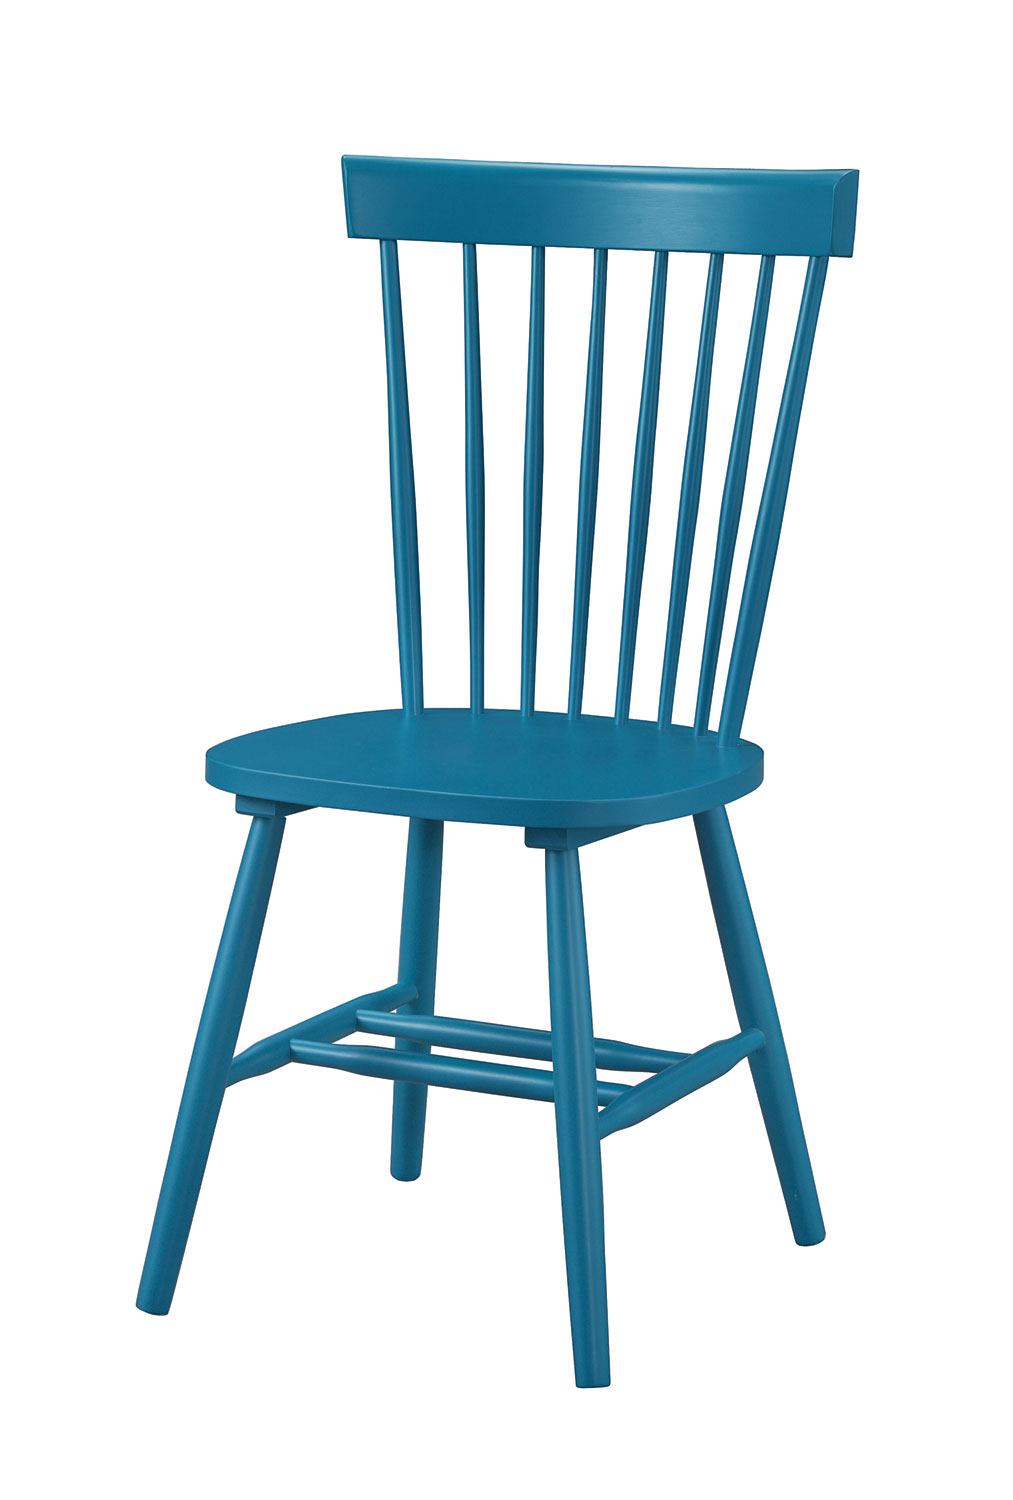 Coaster Emmett Chair - Teal